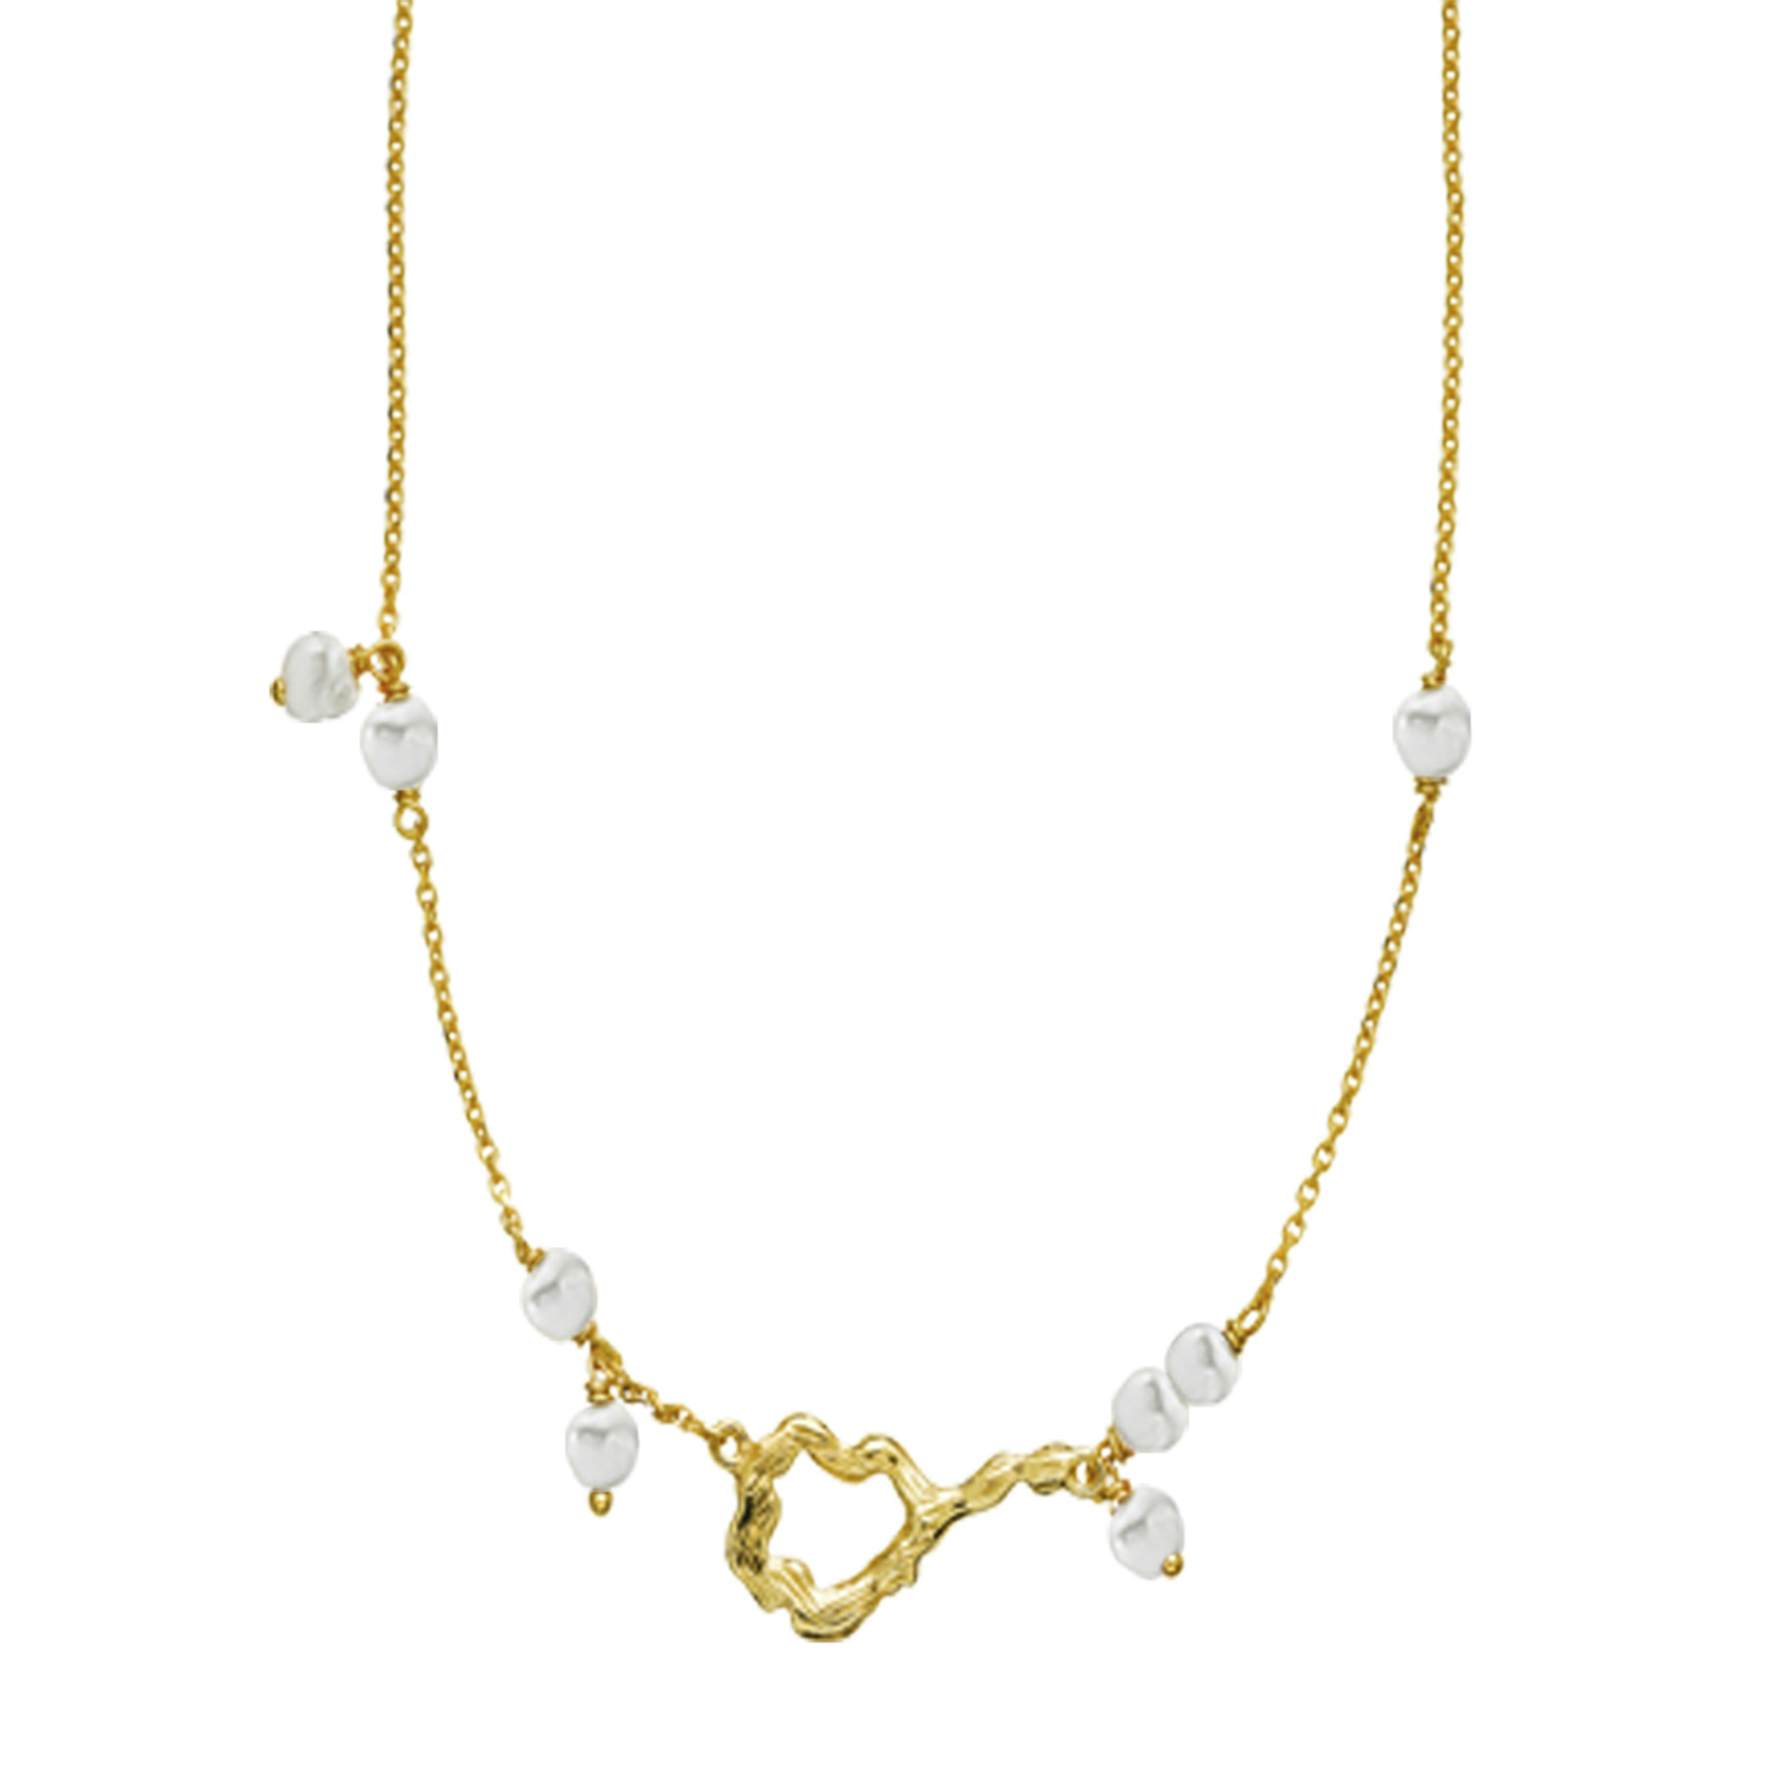 Lærke Bentsen By Sistie Necklace With Pearls fra Sistie i Forgylt-Sølv Sterling 925|Freshwater Pearl